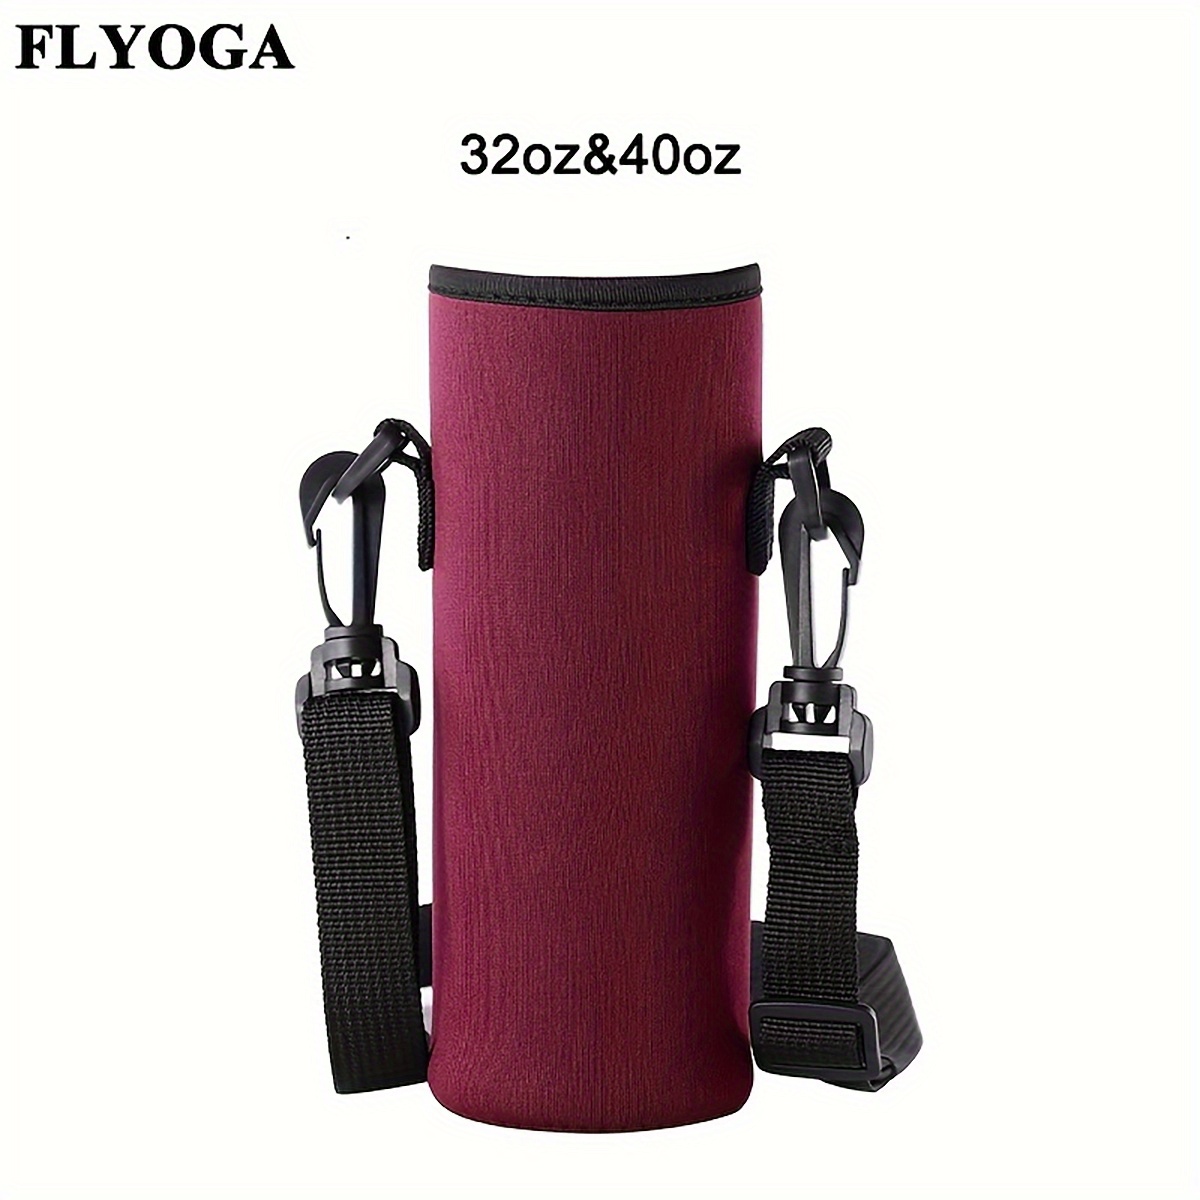 Coldest Carrier, Holder, Sleeve - Fits Insulated Stainless Steel Sports Water  Bottle, Adjustable Shoulder Strap, Holder Bag Case Pouch Cover (64 oz) 